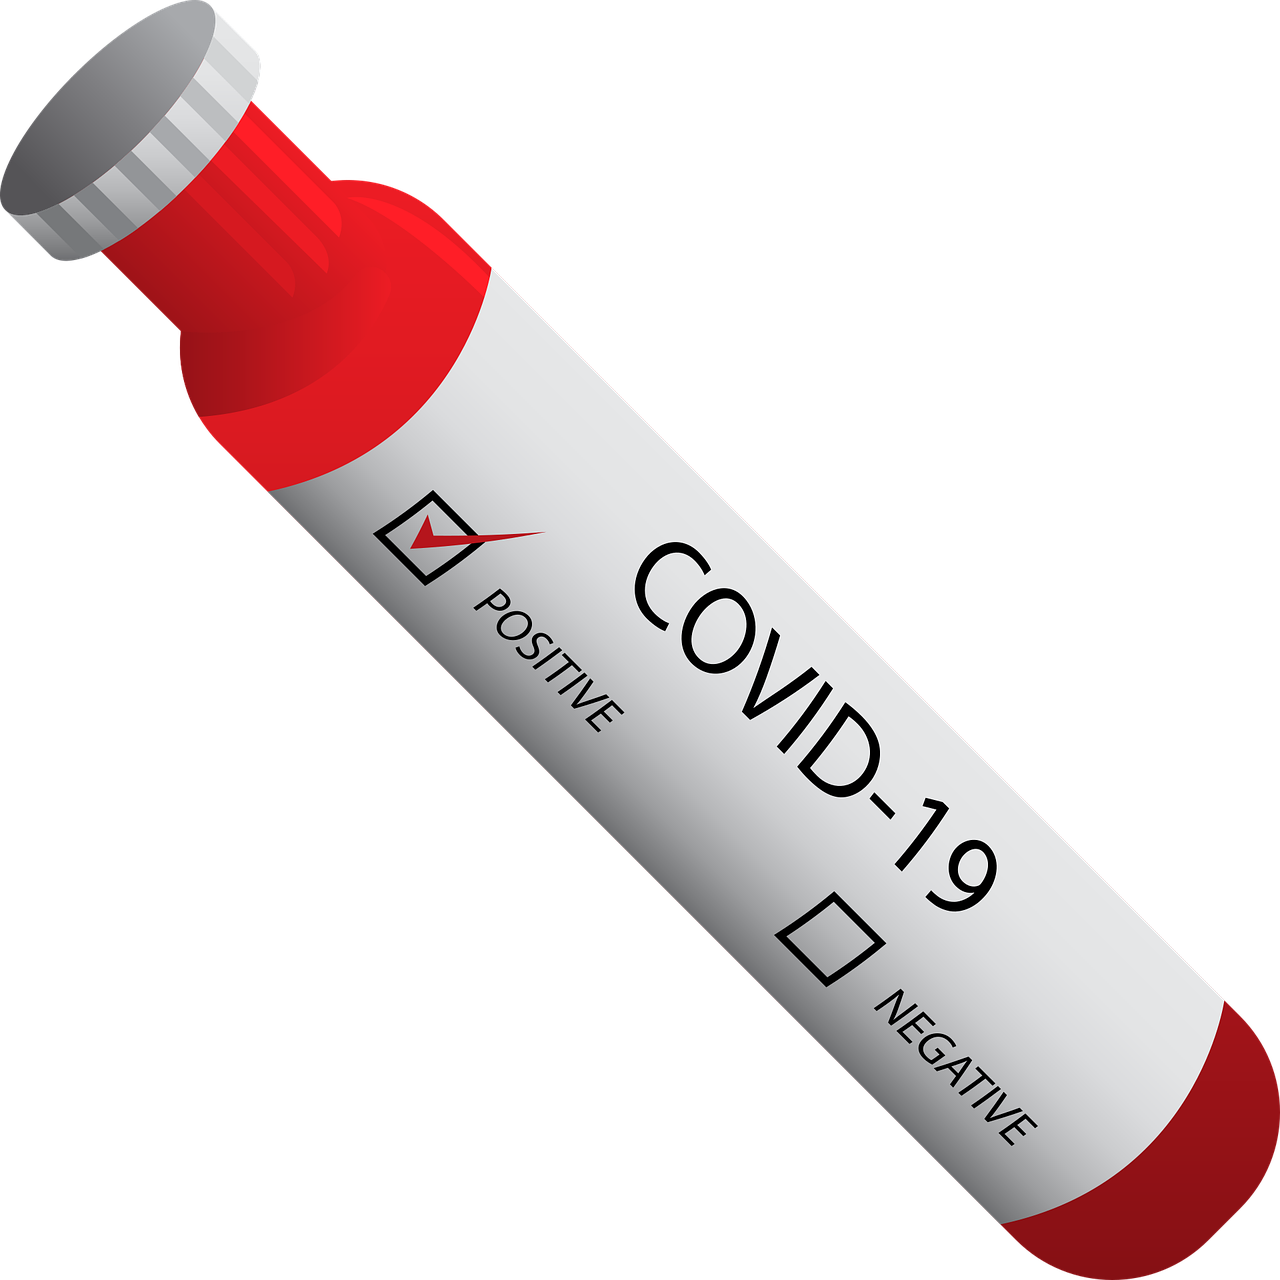 Neues Coronavirus, COVID-19 positiv